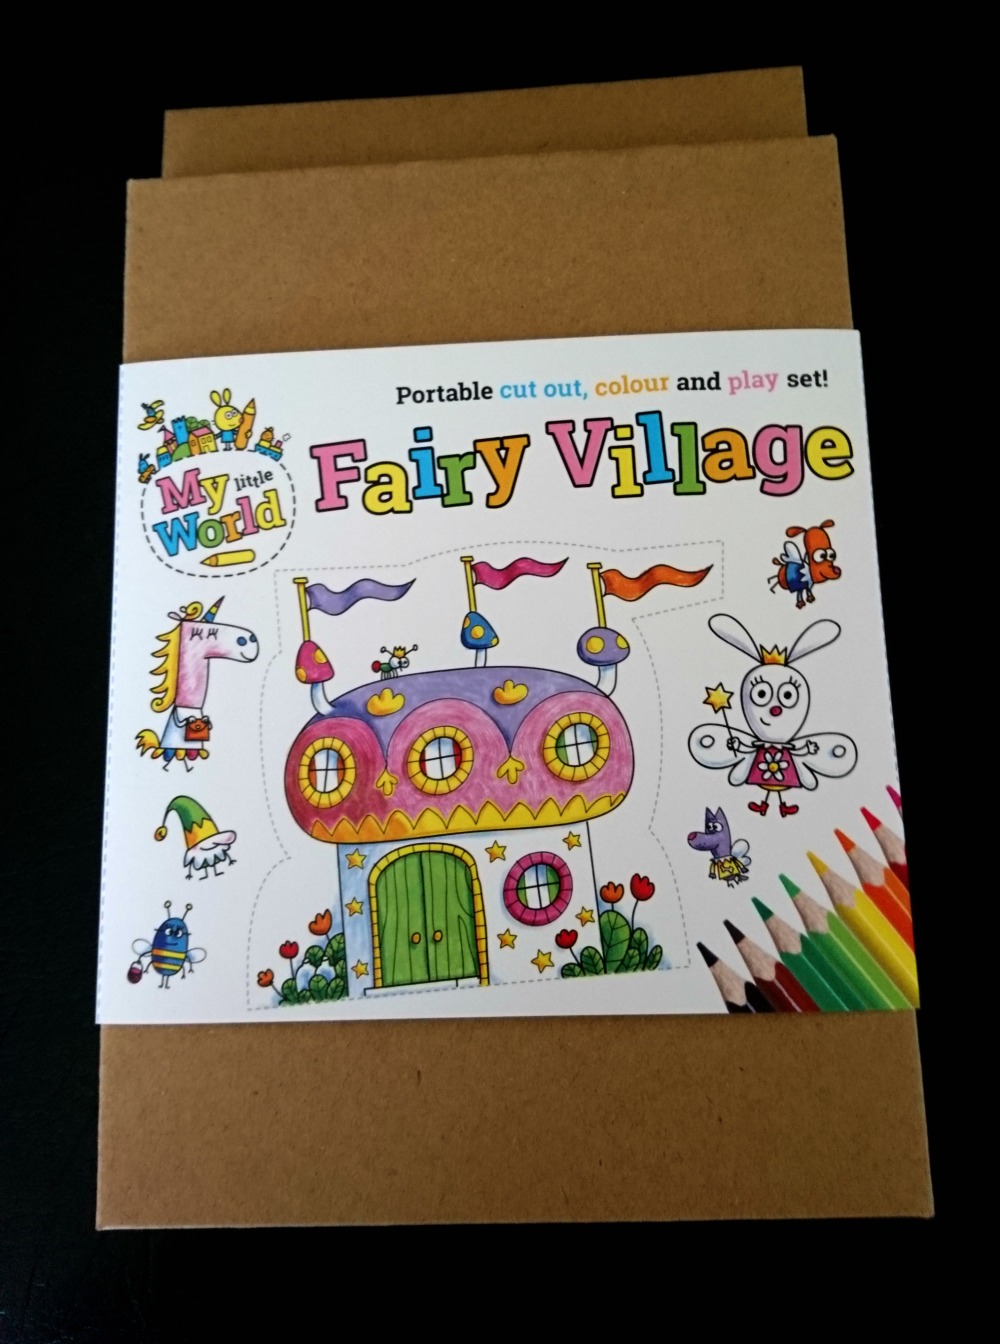 My Little World giveaway (Fairy Village)